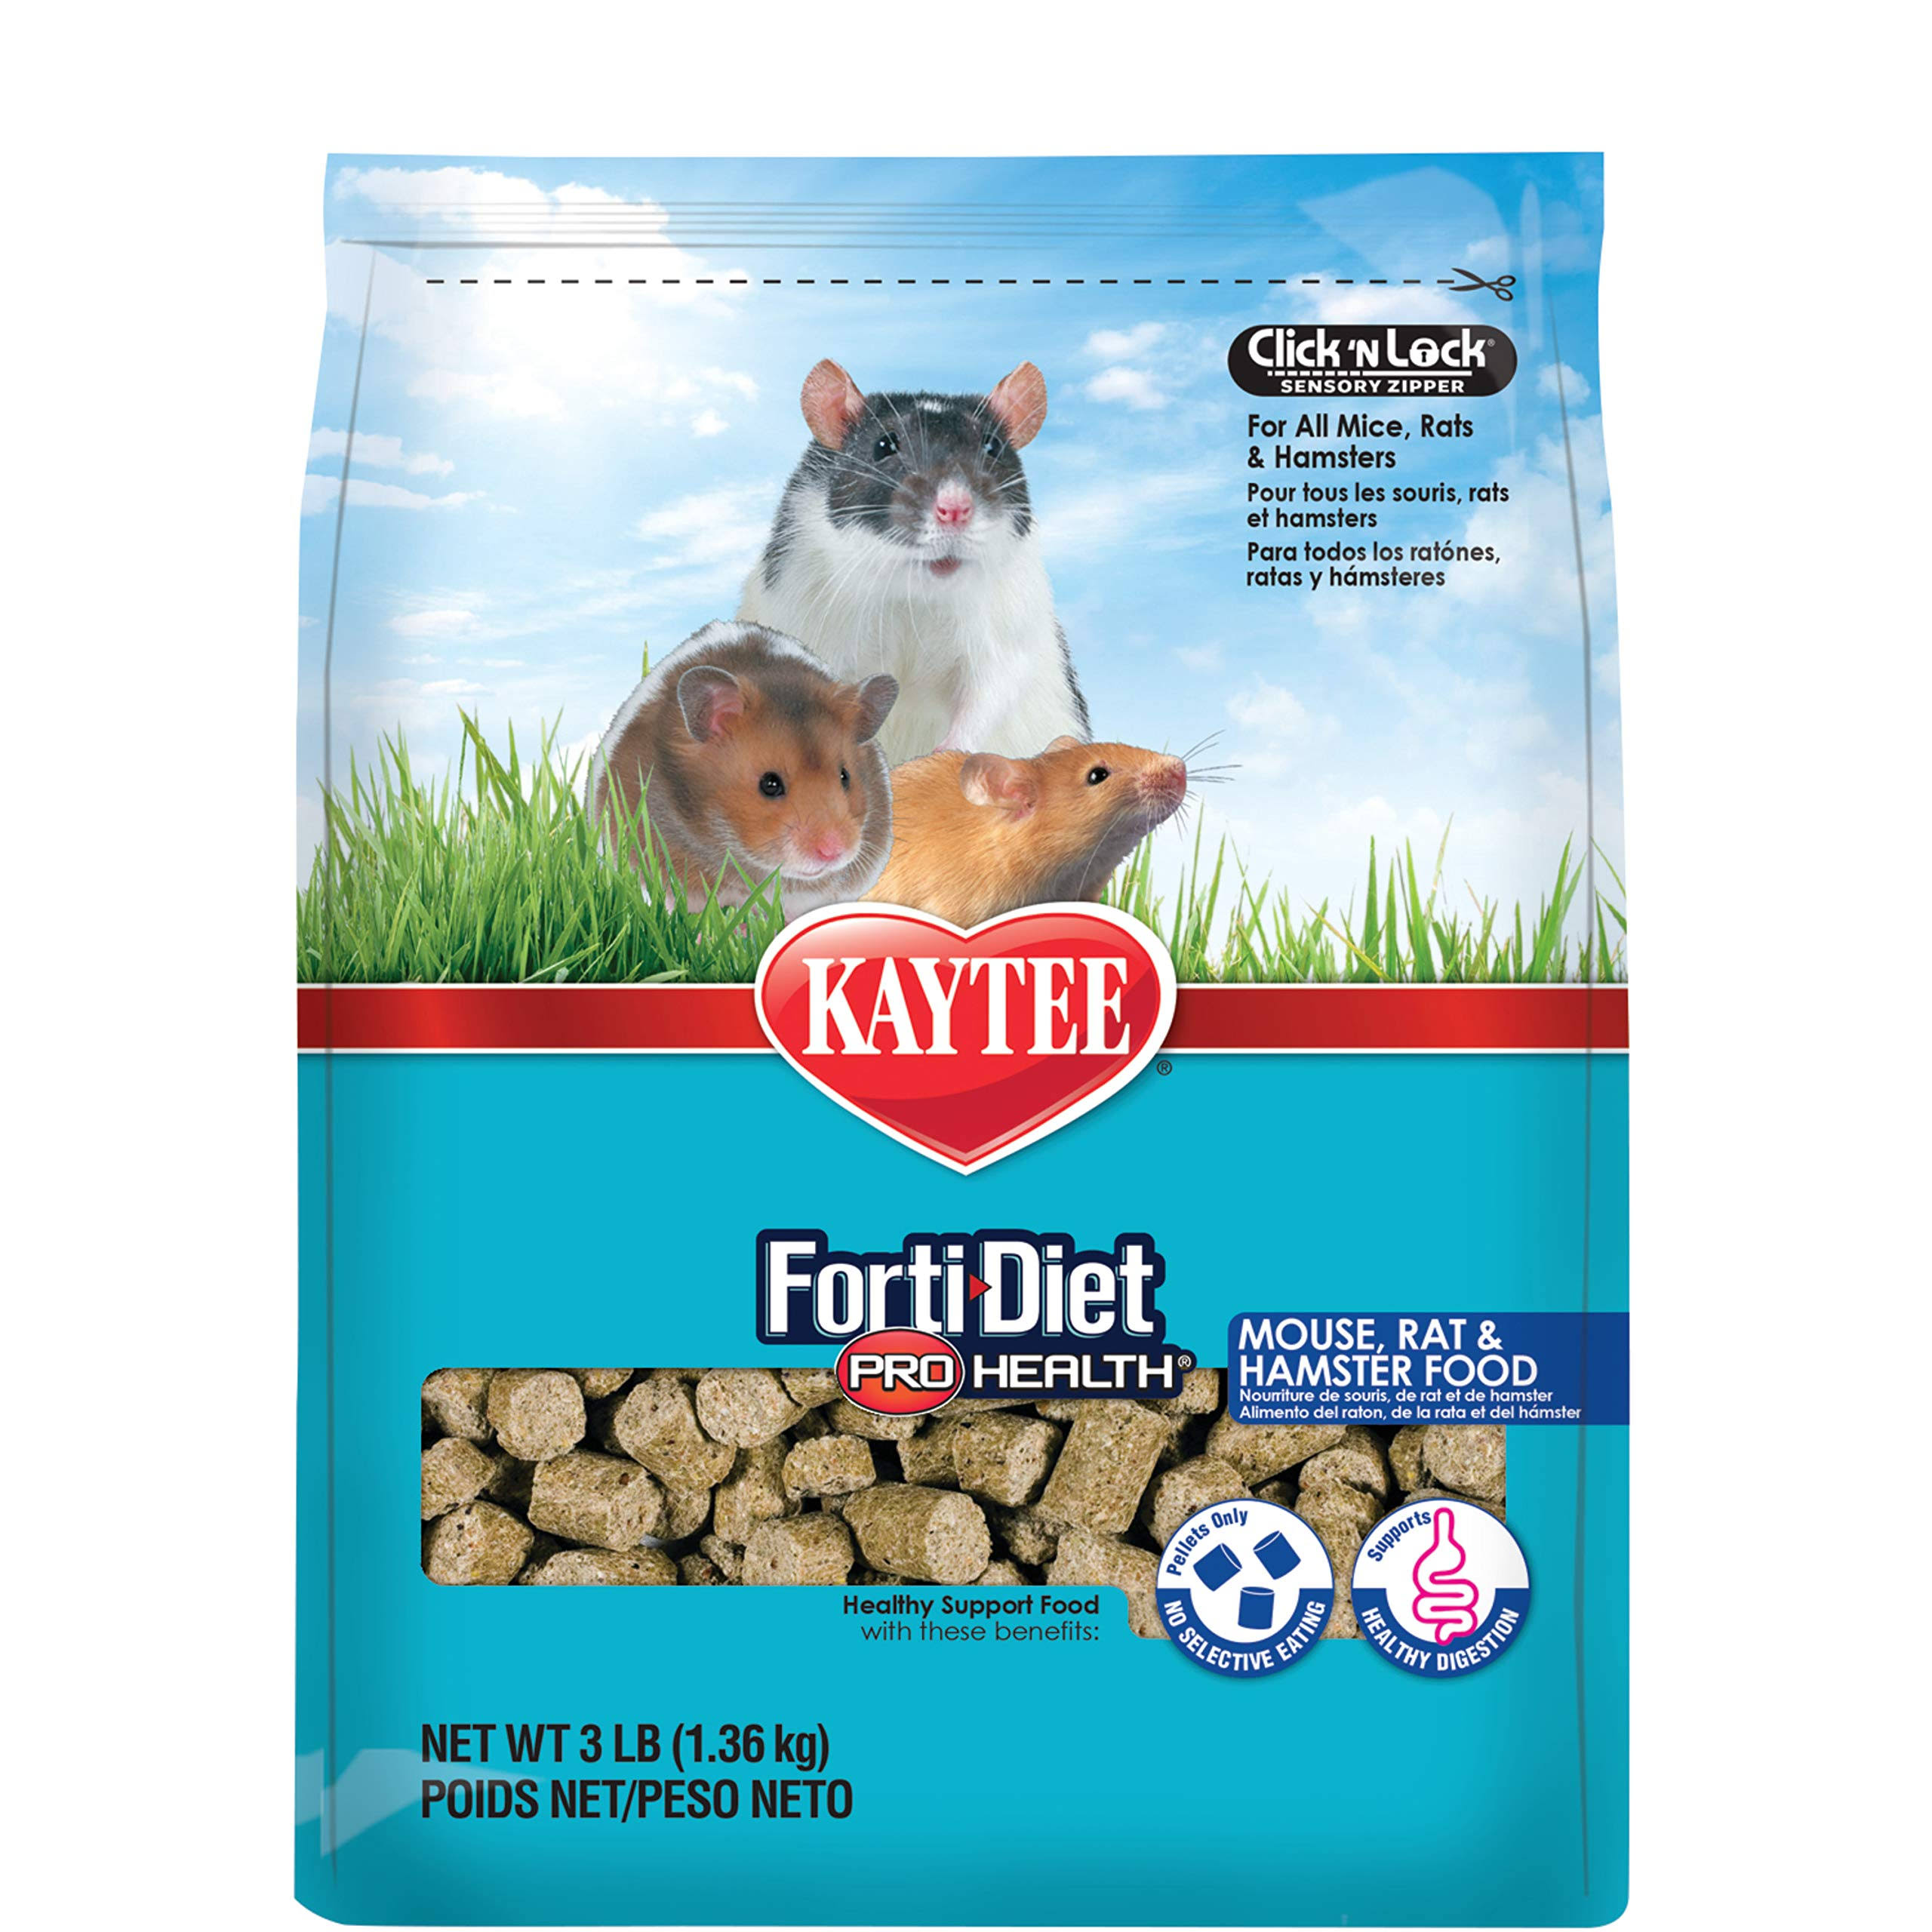 Kaytee Forti-Diet Pro Health Mouse Rat & Hamster Food - 3lb